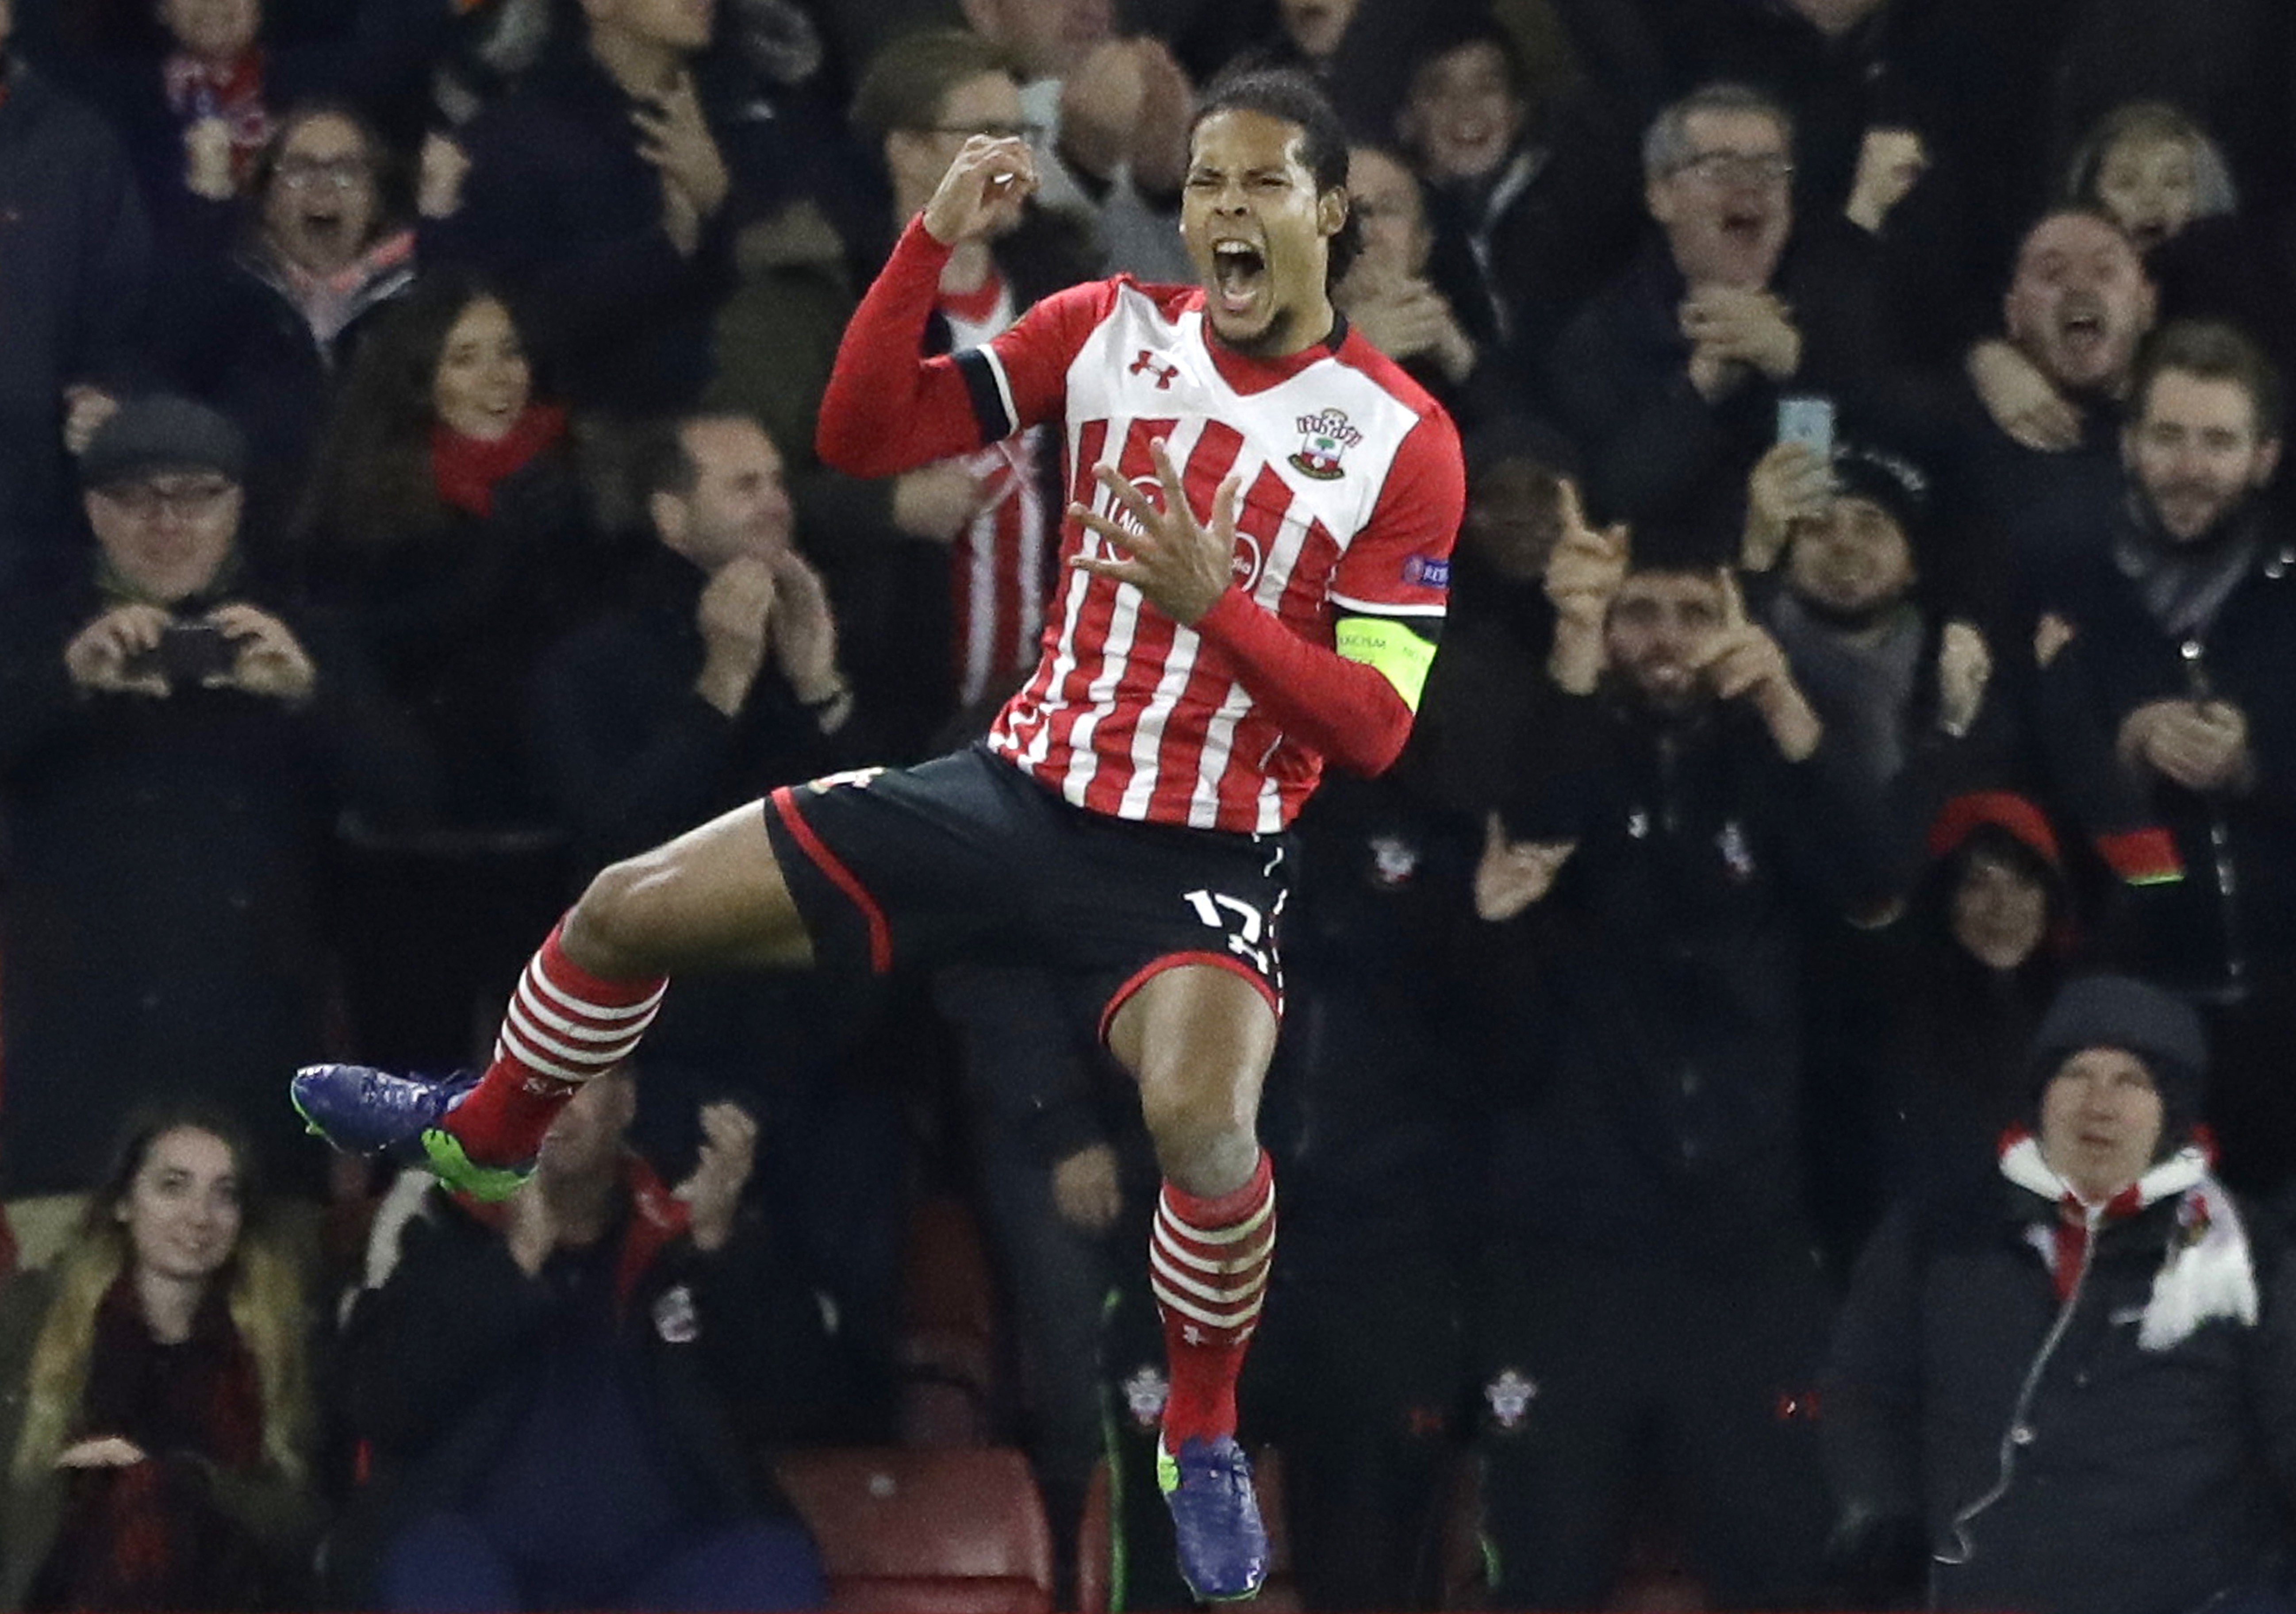 Southampton's Virgil van Dijk celebrates scoring during the Europa League group stage match against Internazionale. Photo: AP